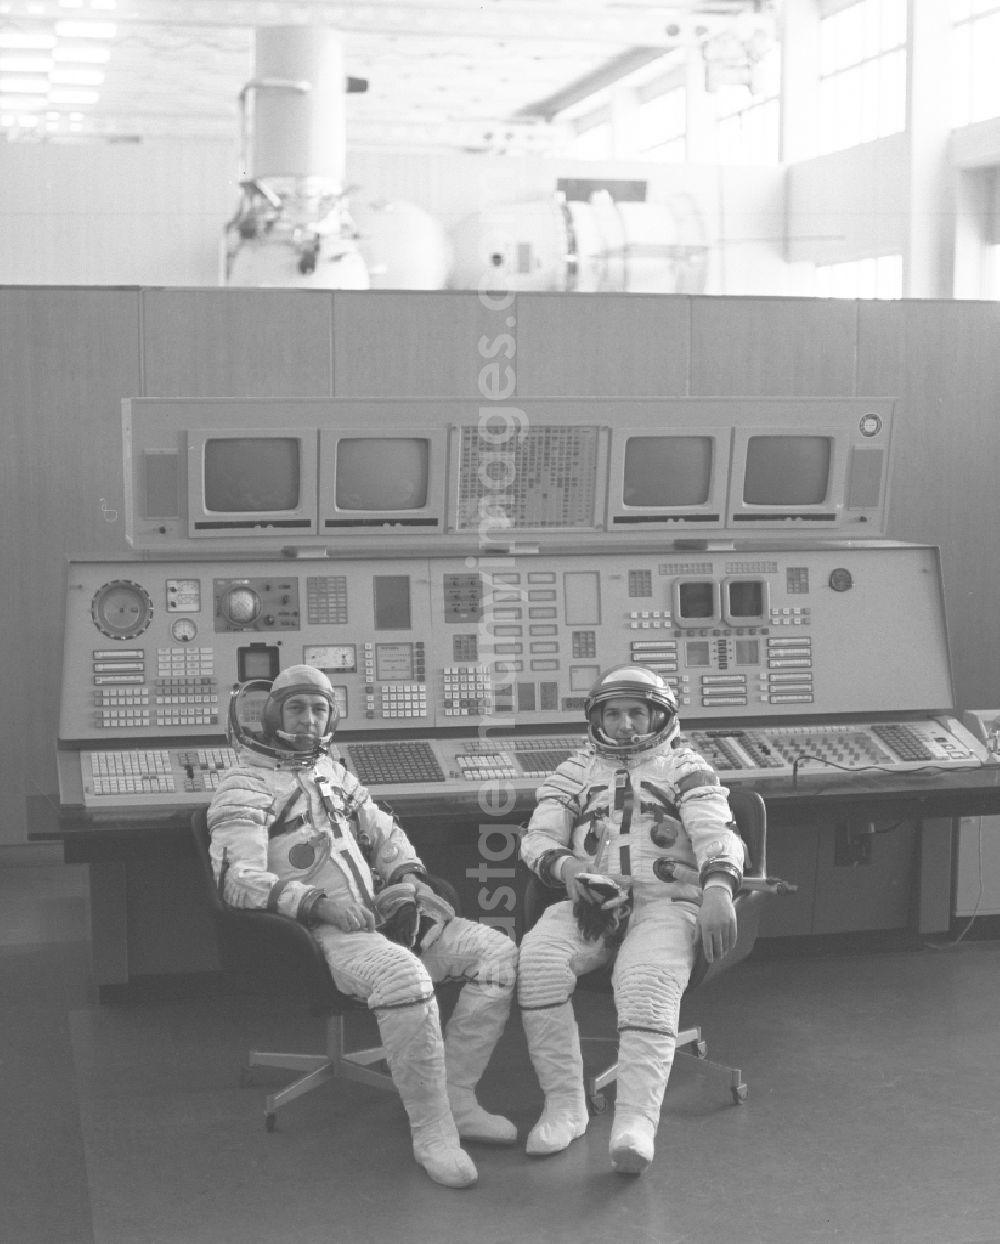 GDR picture archive: Baikonur - The cosmonauts Pyotr Klimuk and Vitaly Sevastyanov (1935 - 201